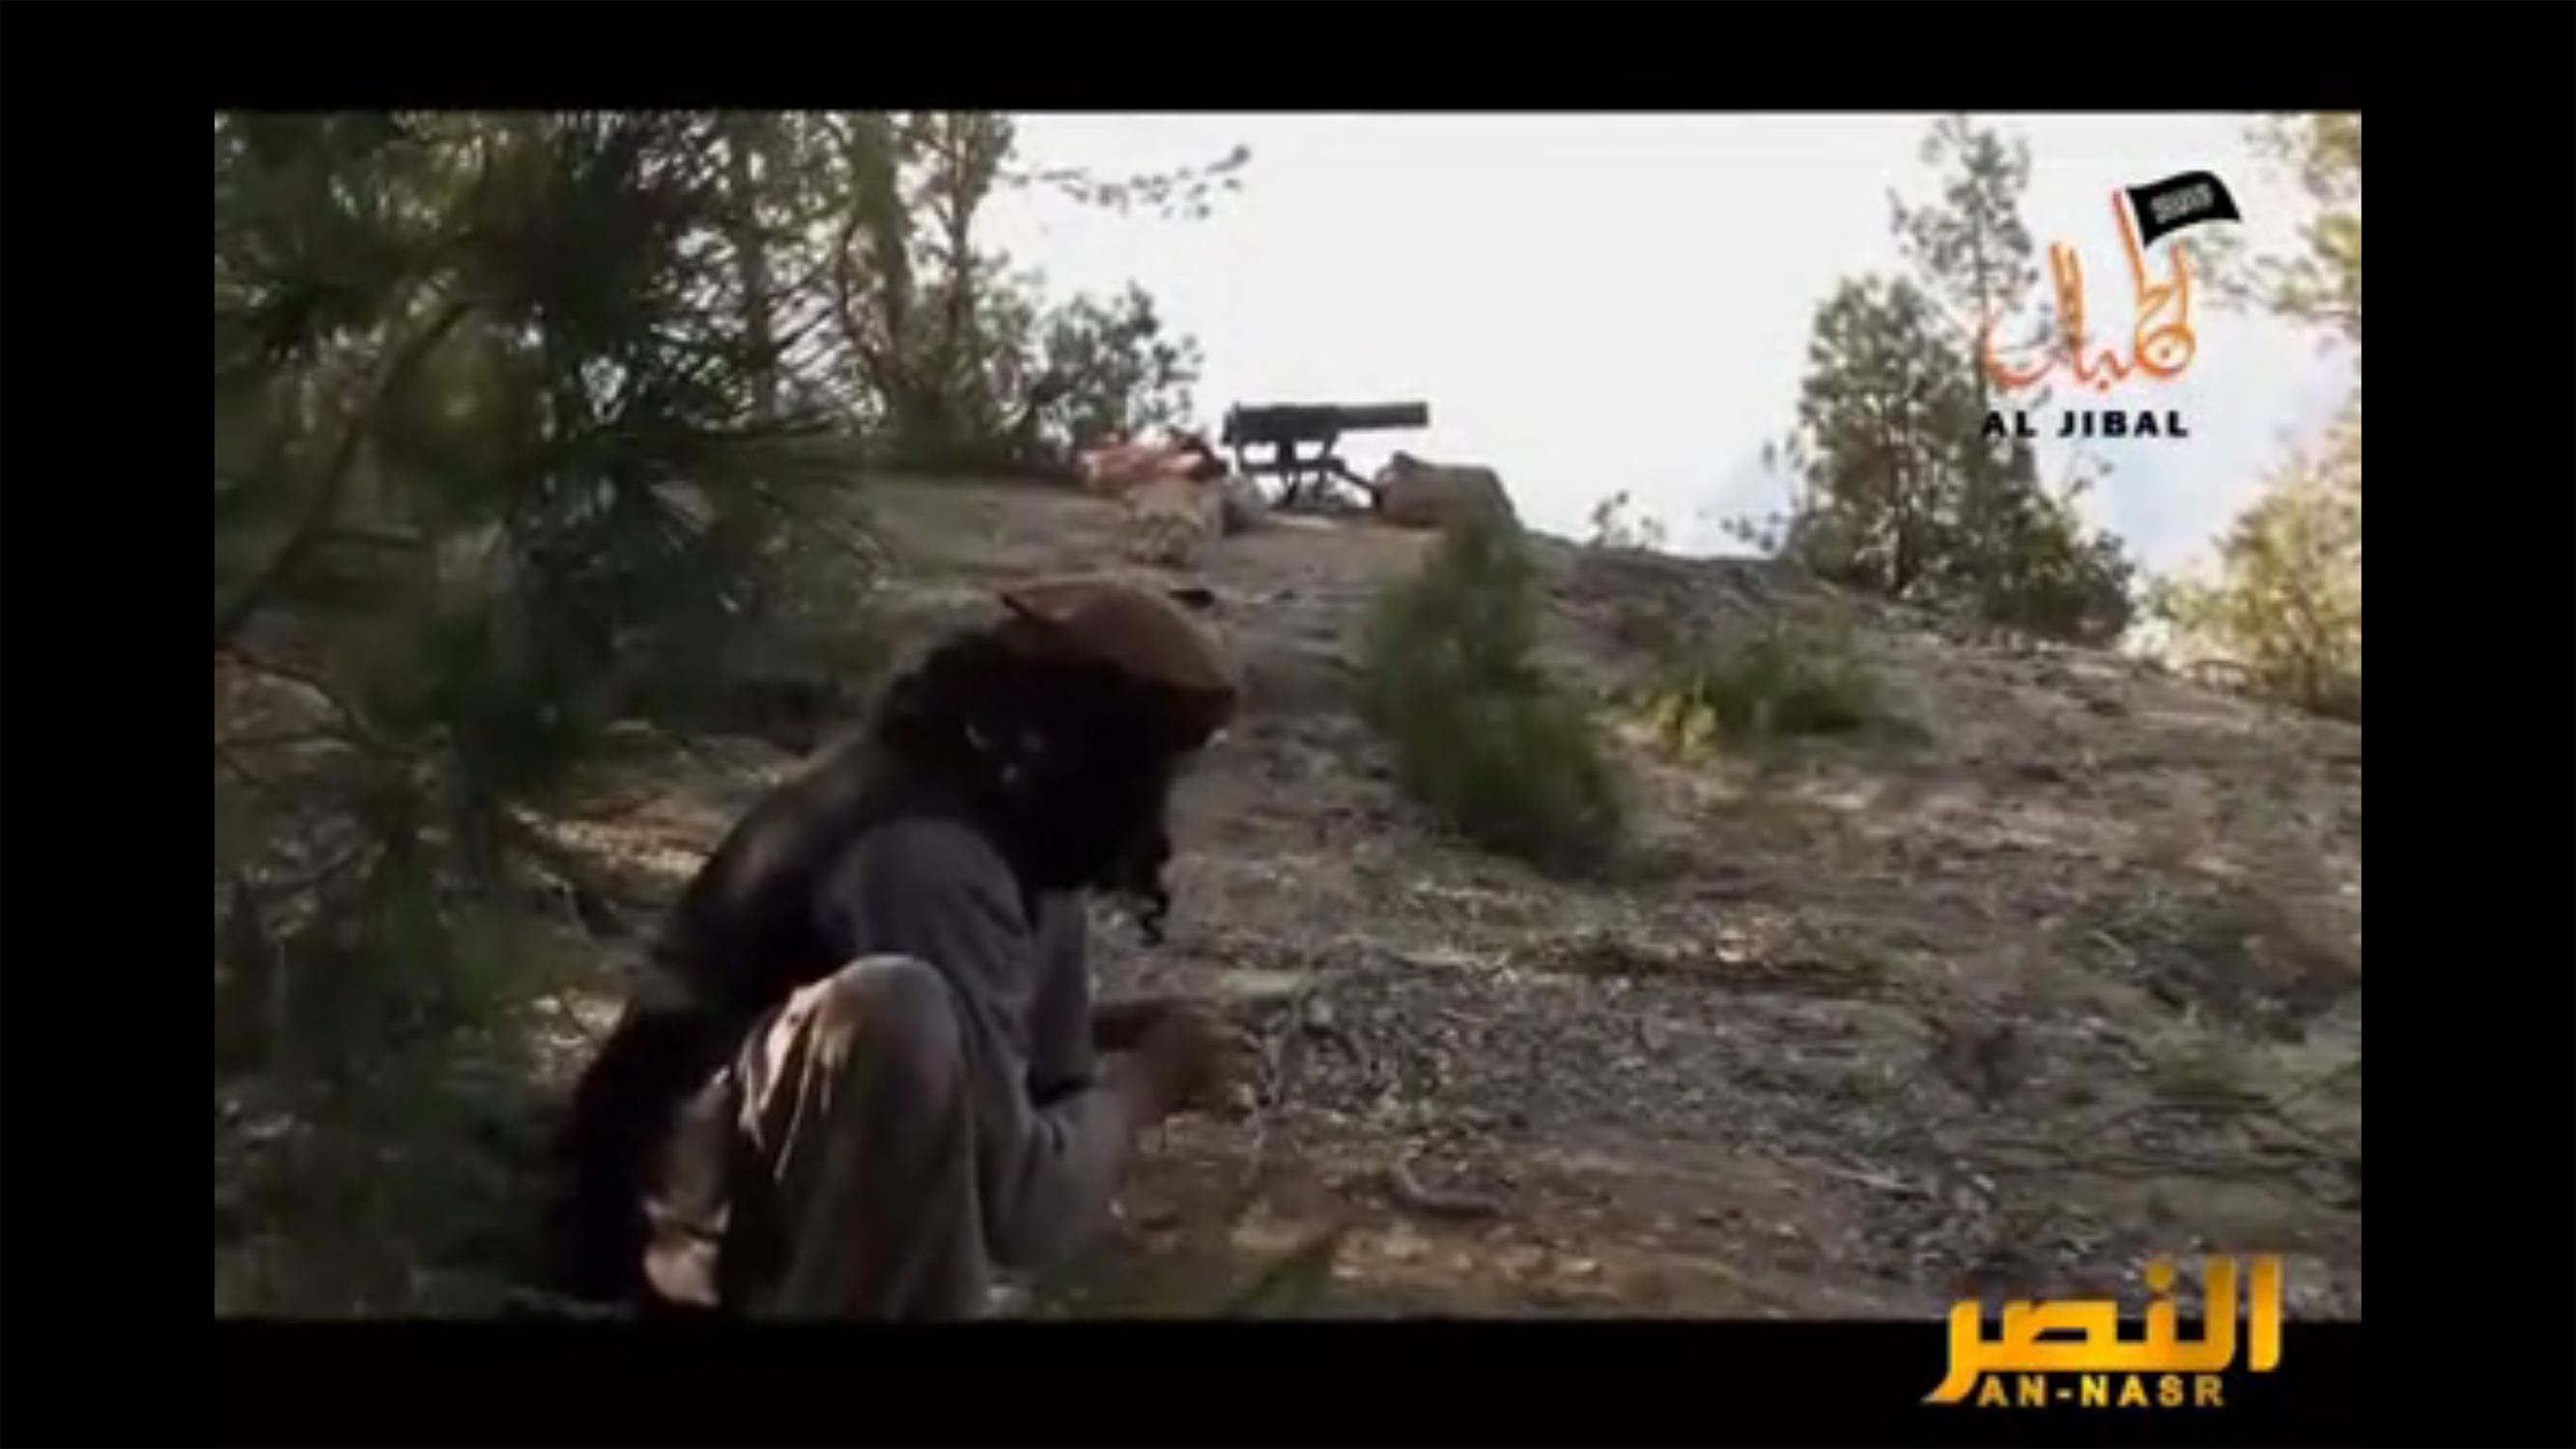 Afghanistan An-Nasr al-Qaeda video